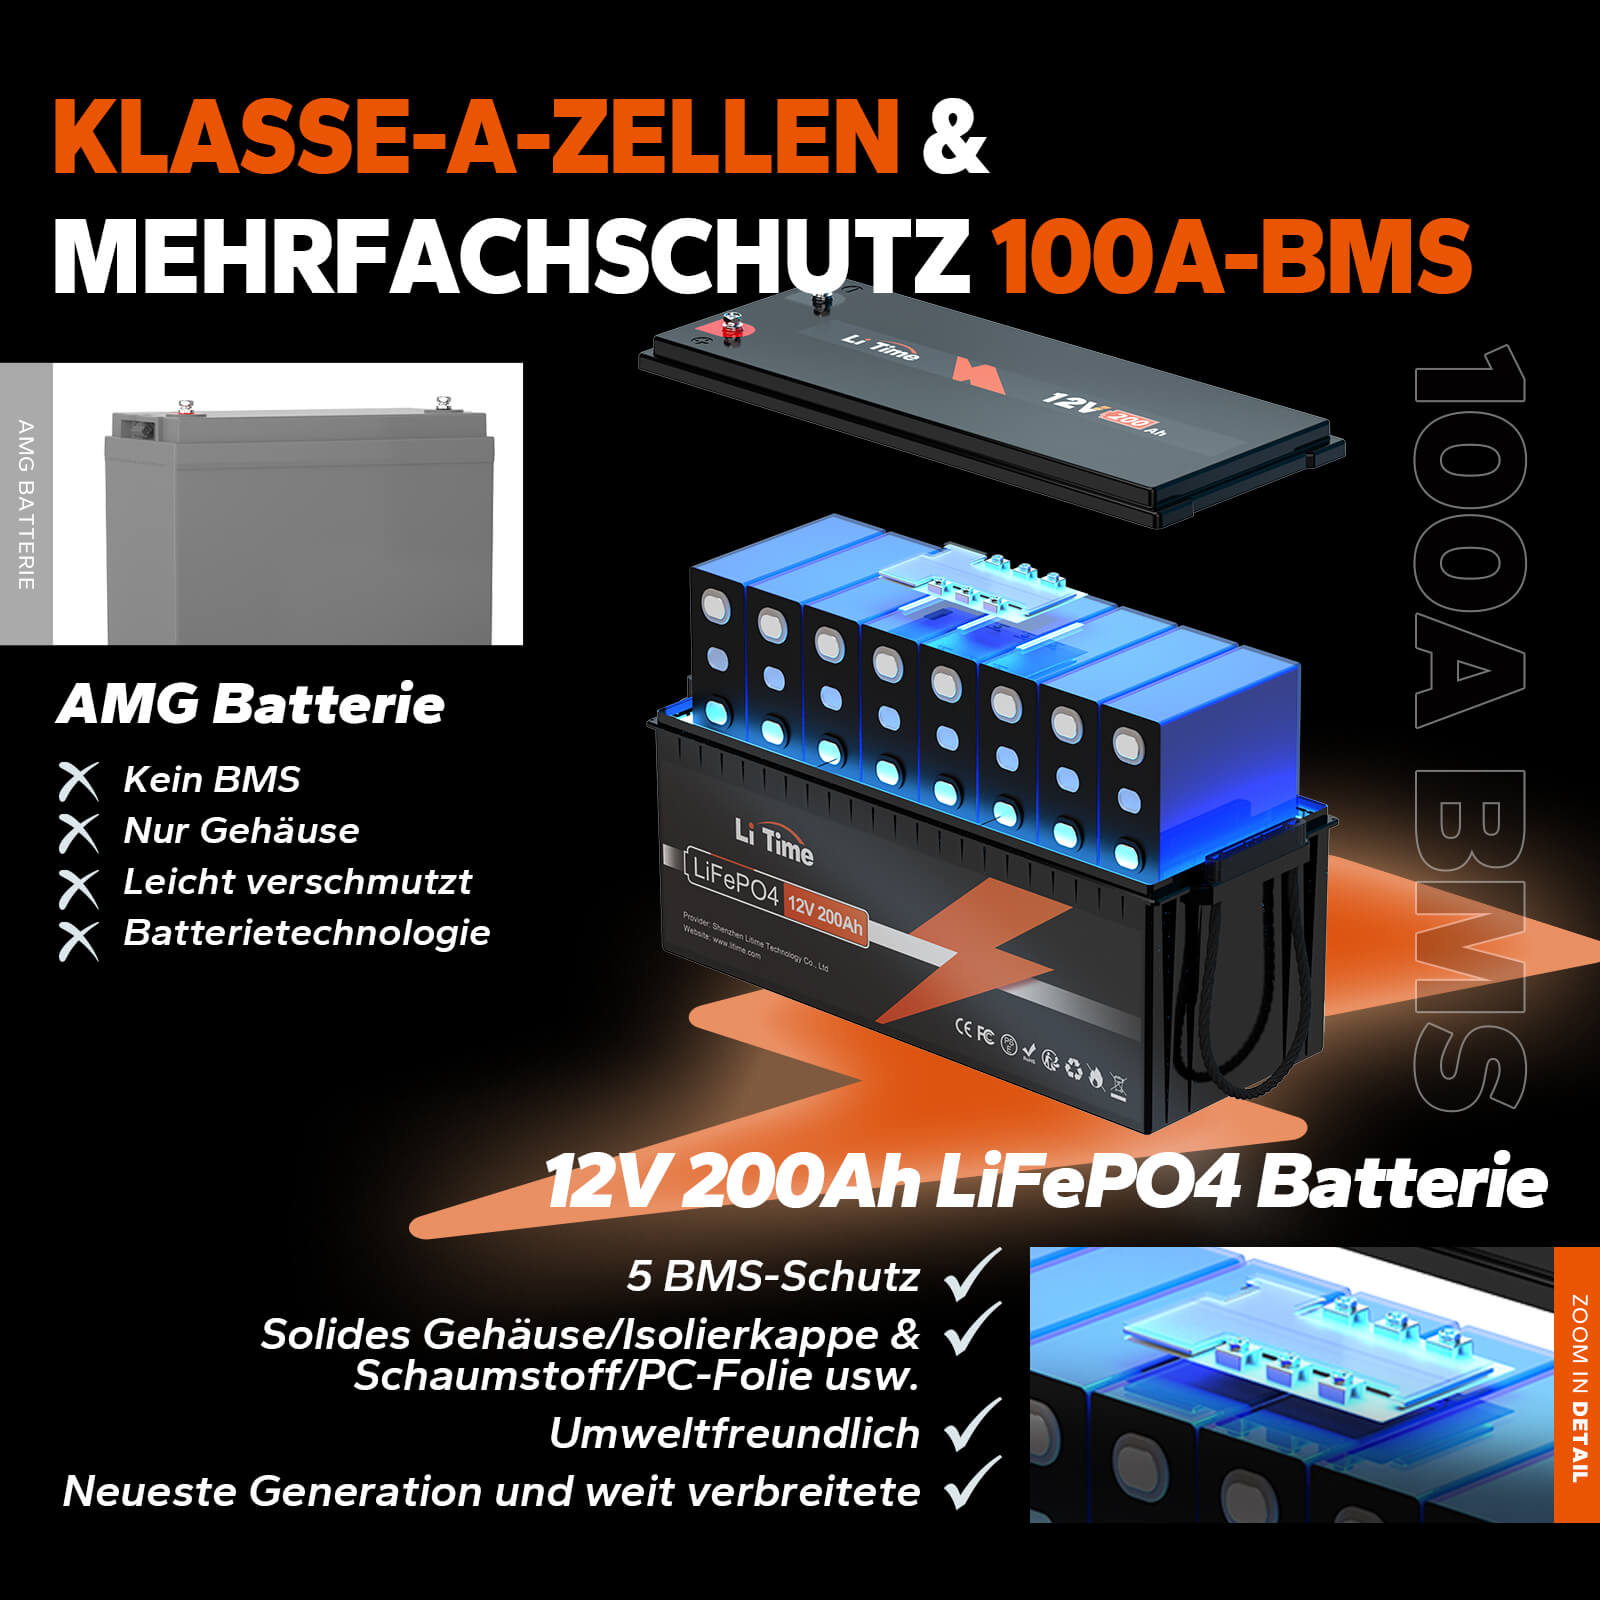 ✅Używany✅ akumulator litowy LiTime 12V 200Ah LiFePO4